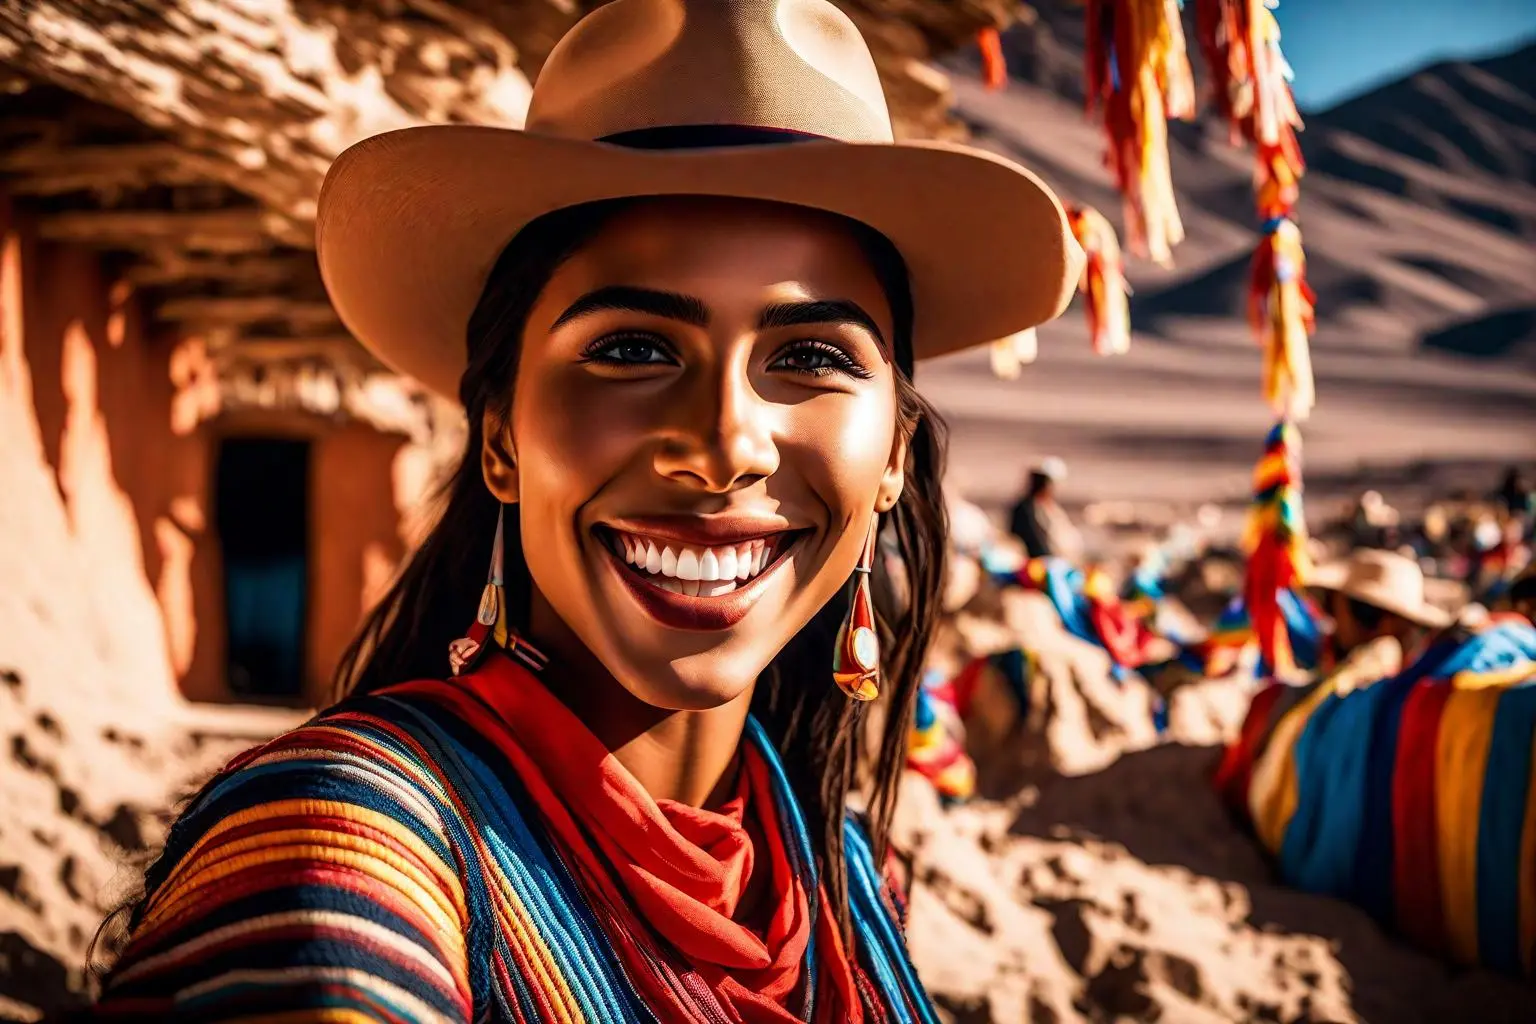 Bolivian woman - Typical Characteristics